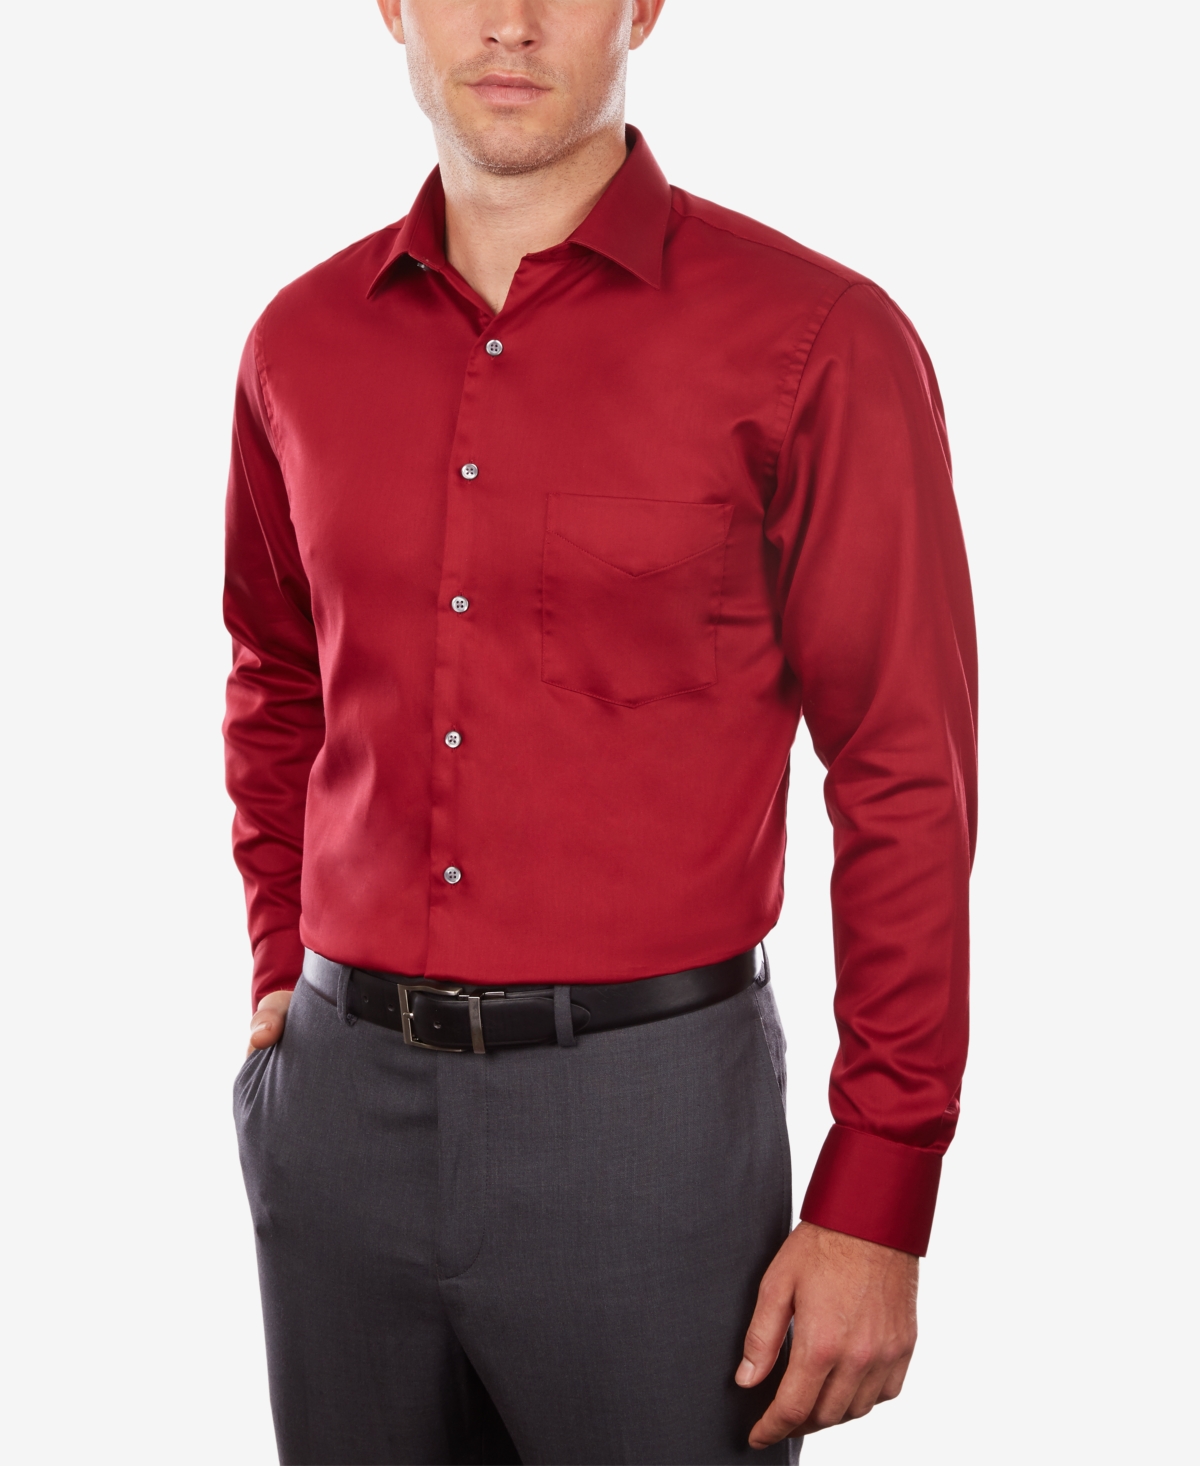 Men's Classic/Regular Fit Stretch Wrinkle Free Sateen Dress Shirt - Red